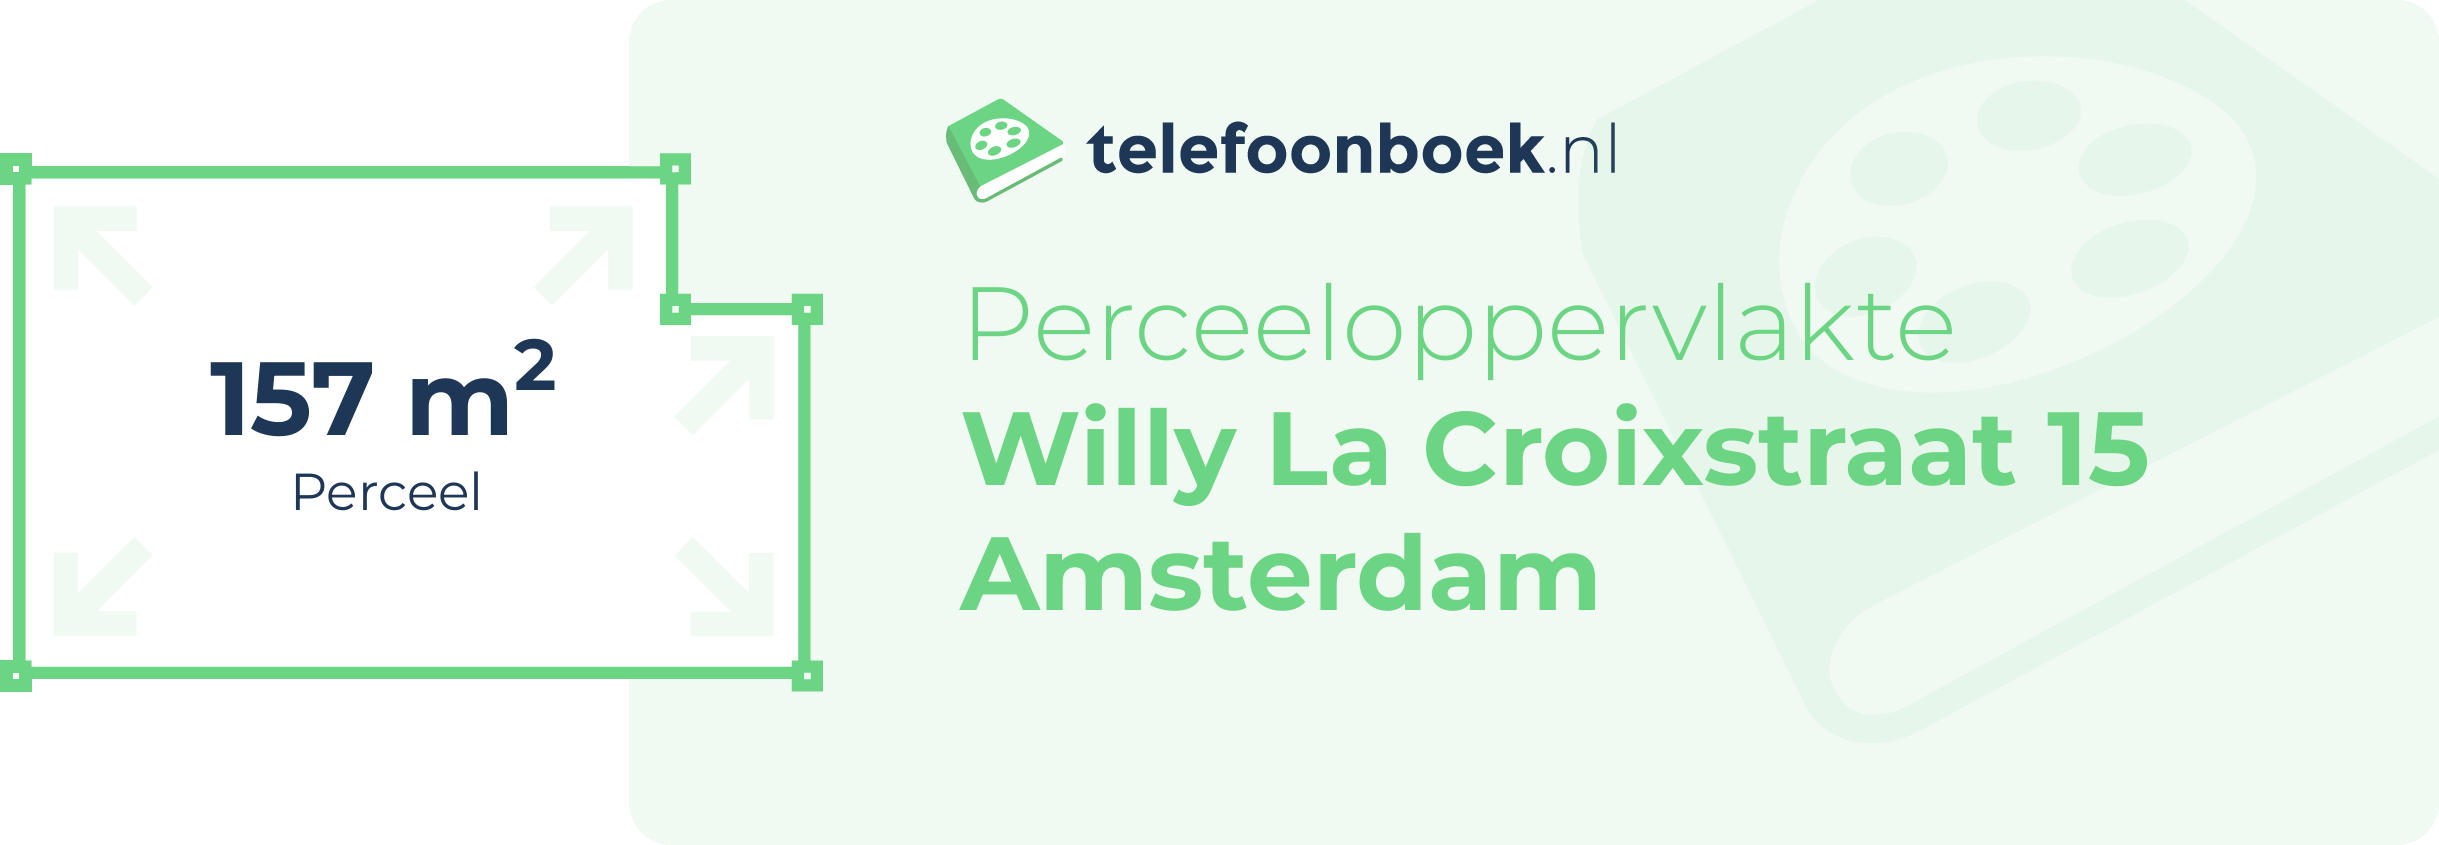 Perceeloppervlakte Willy La Croixstraat 15 Amsterdam